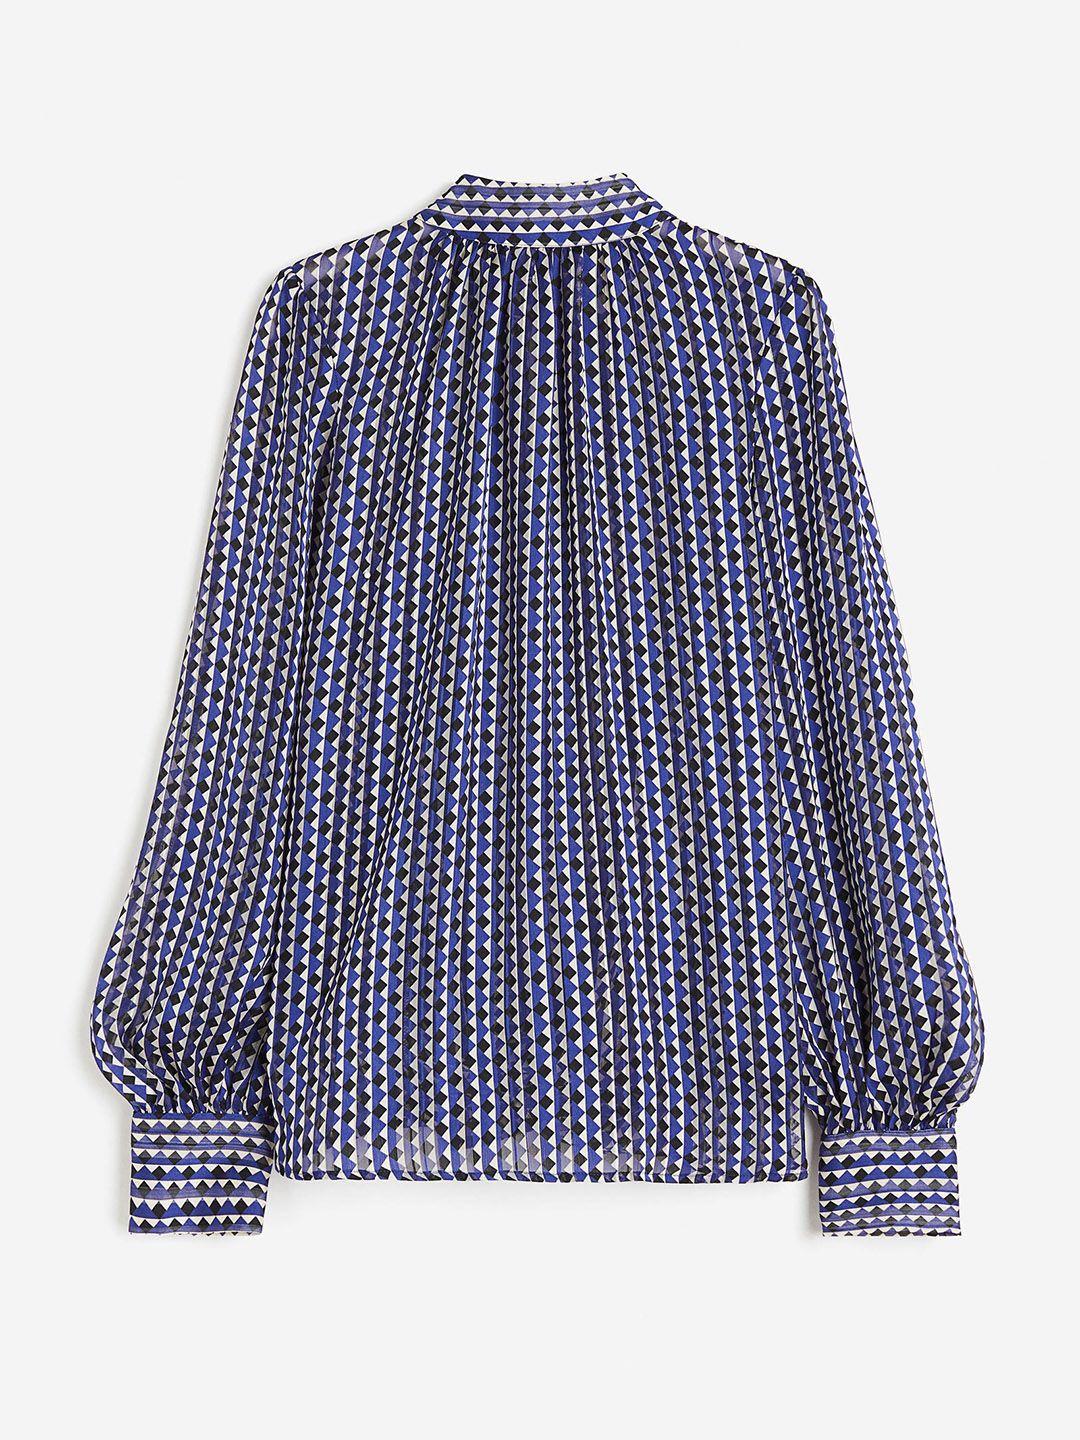 h&m patterned blouse